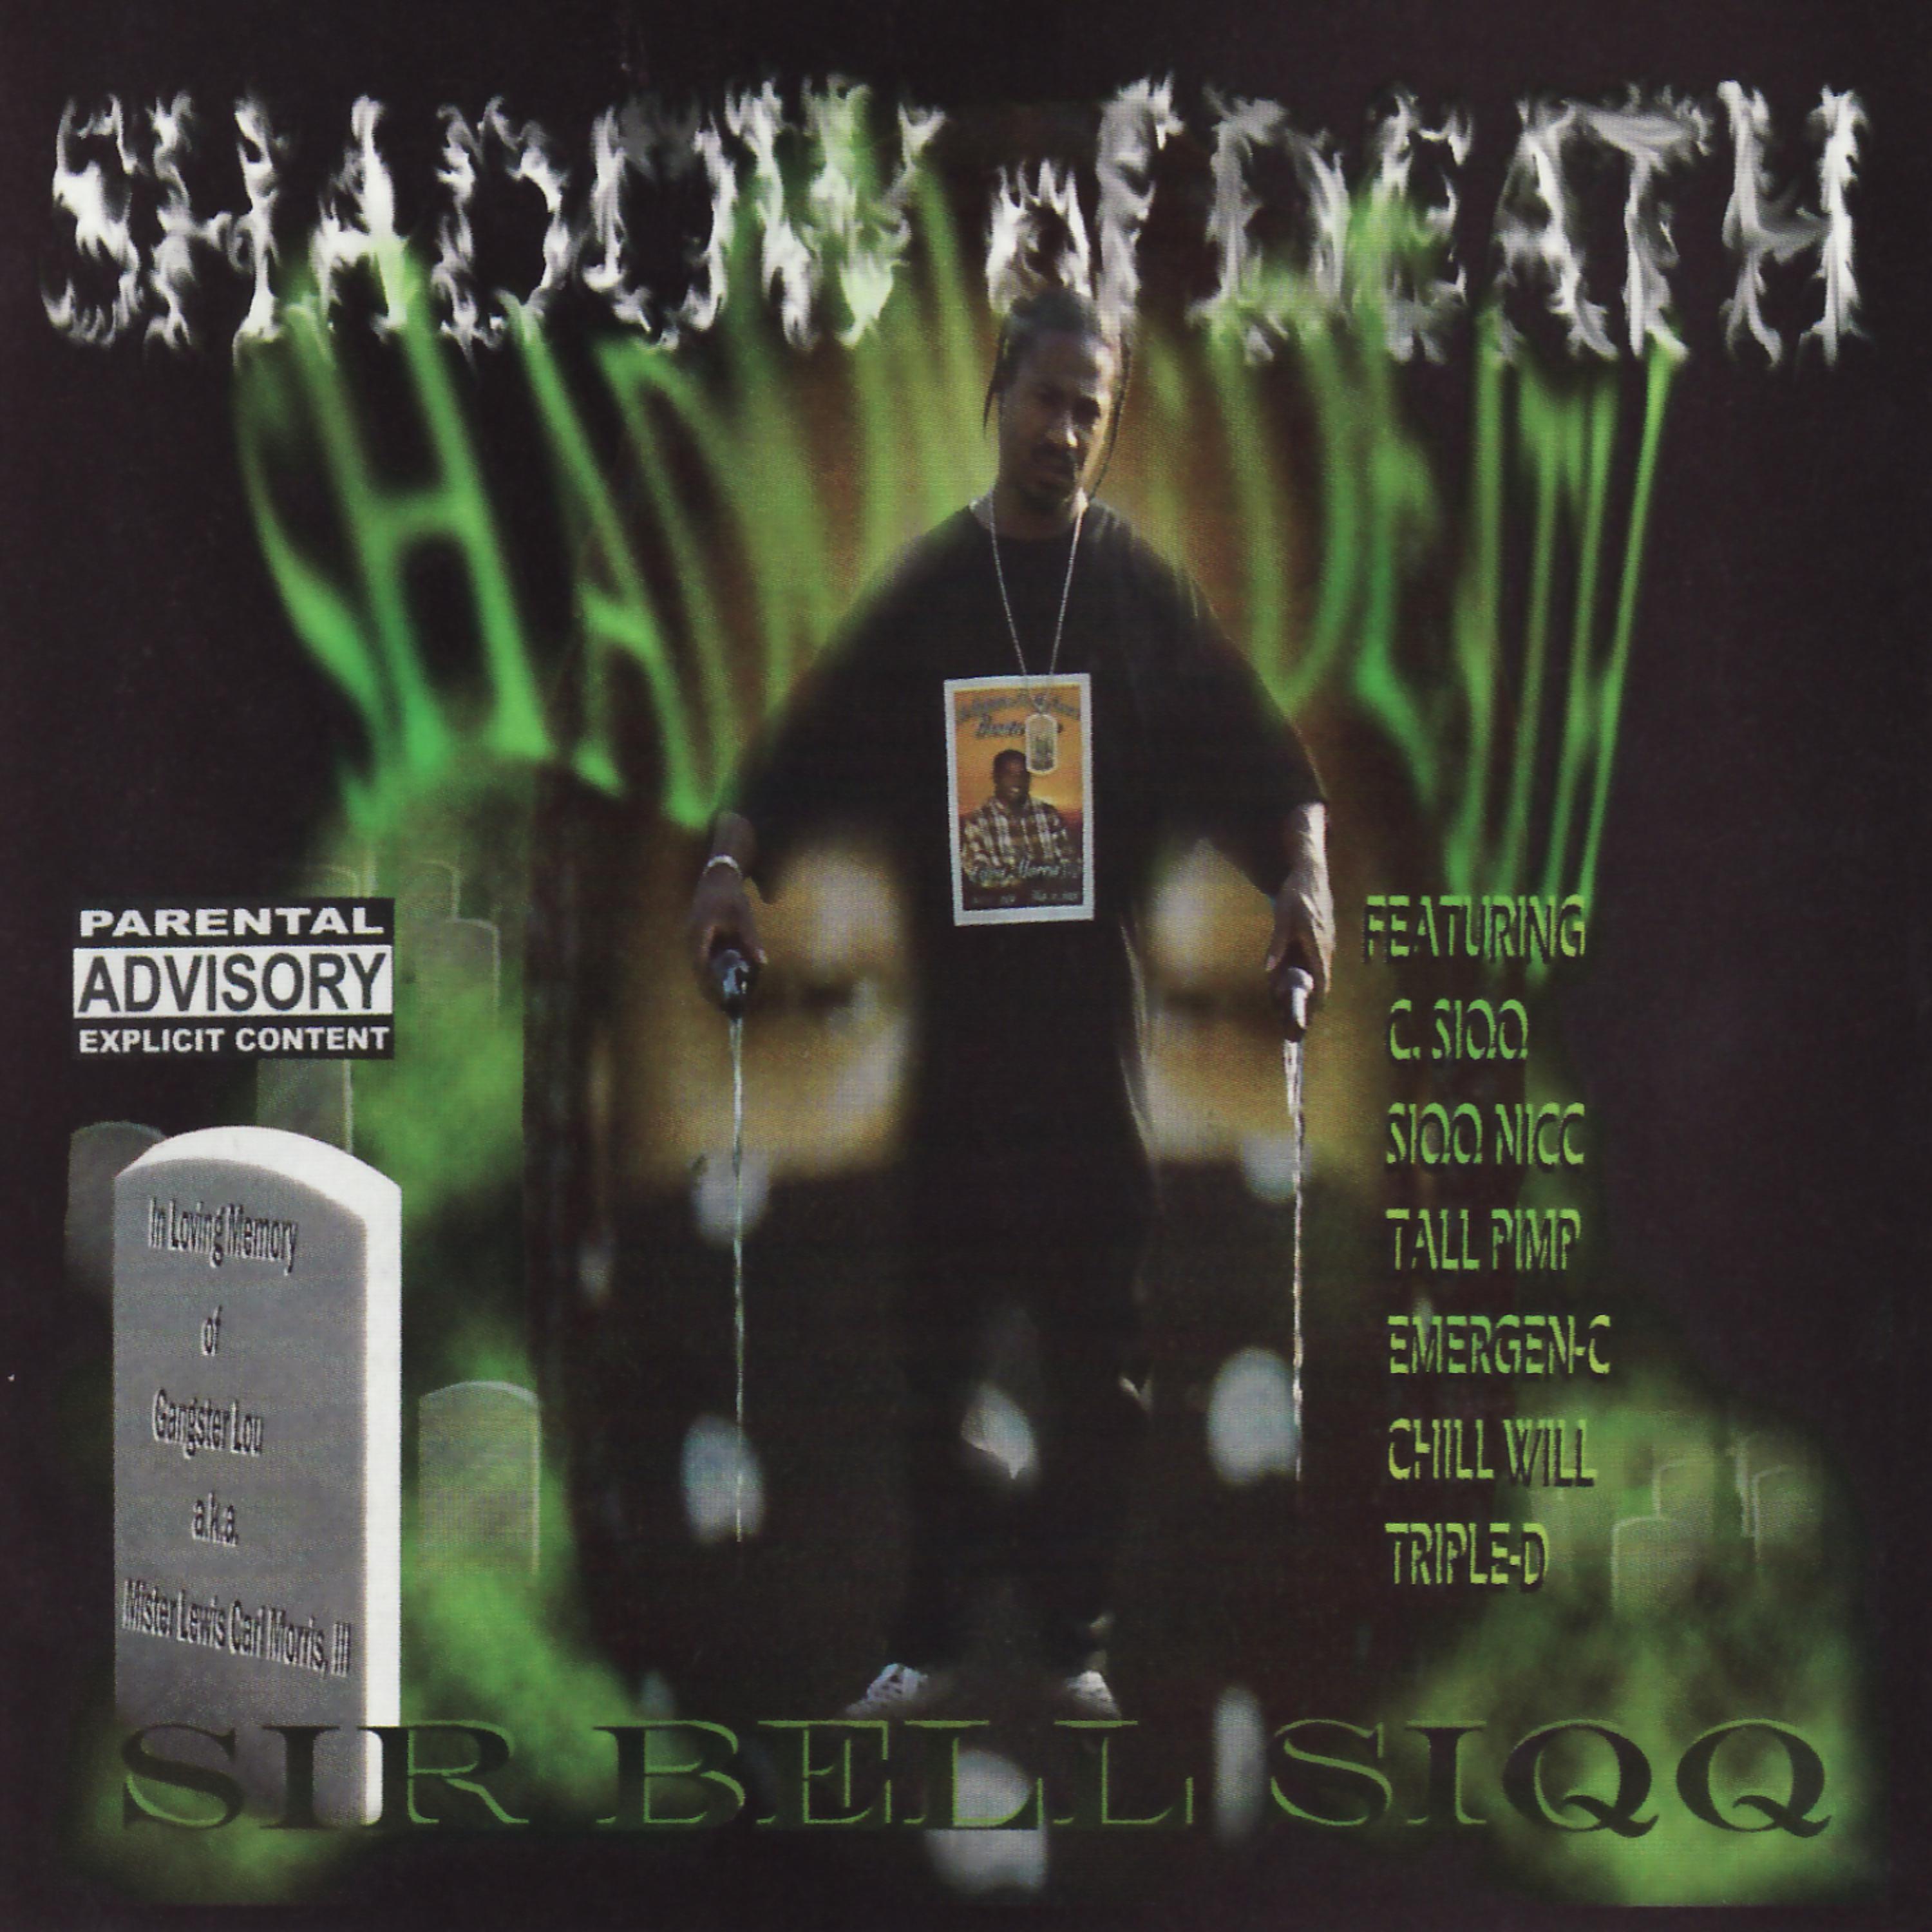 Постер альбома Shadow of Death